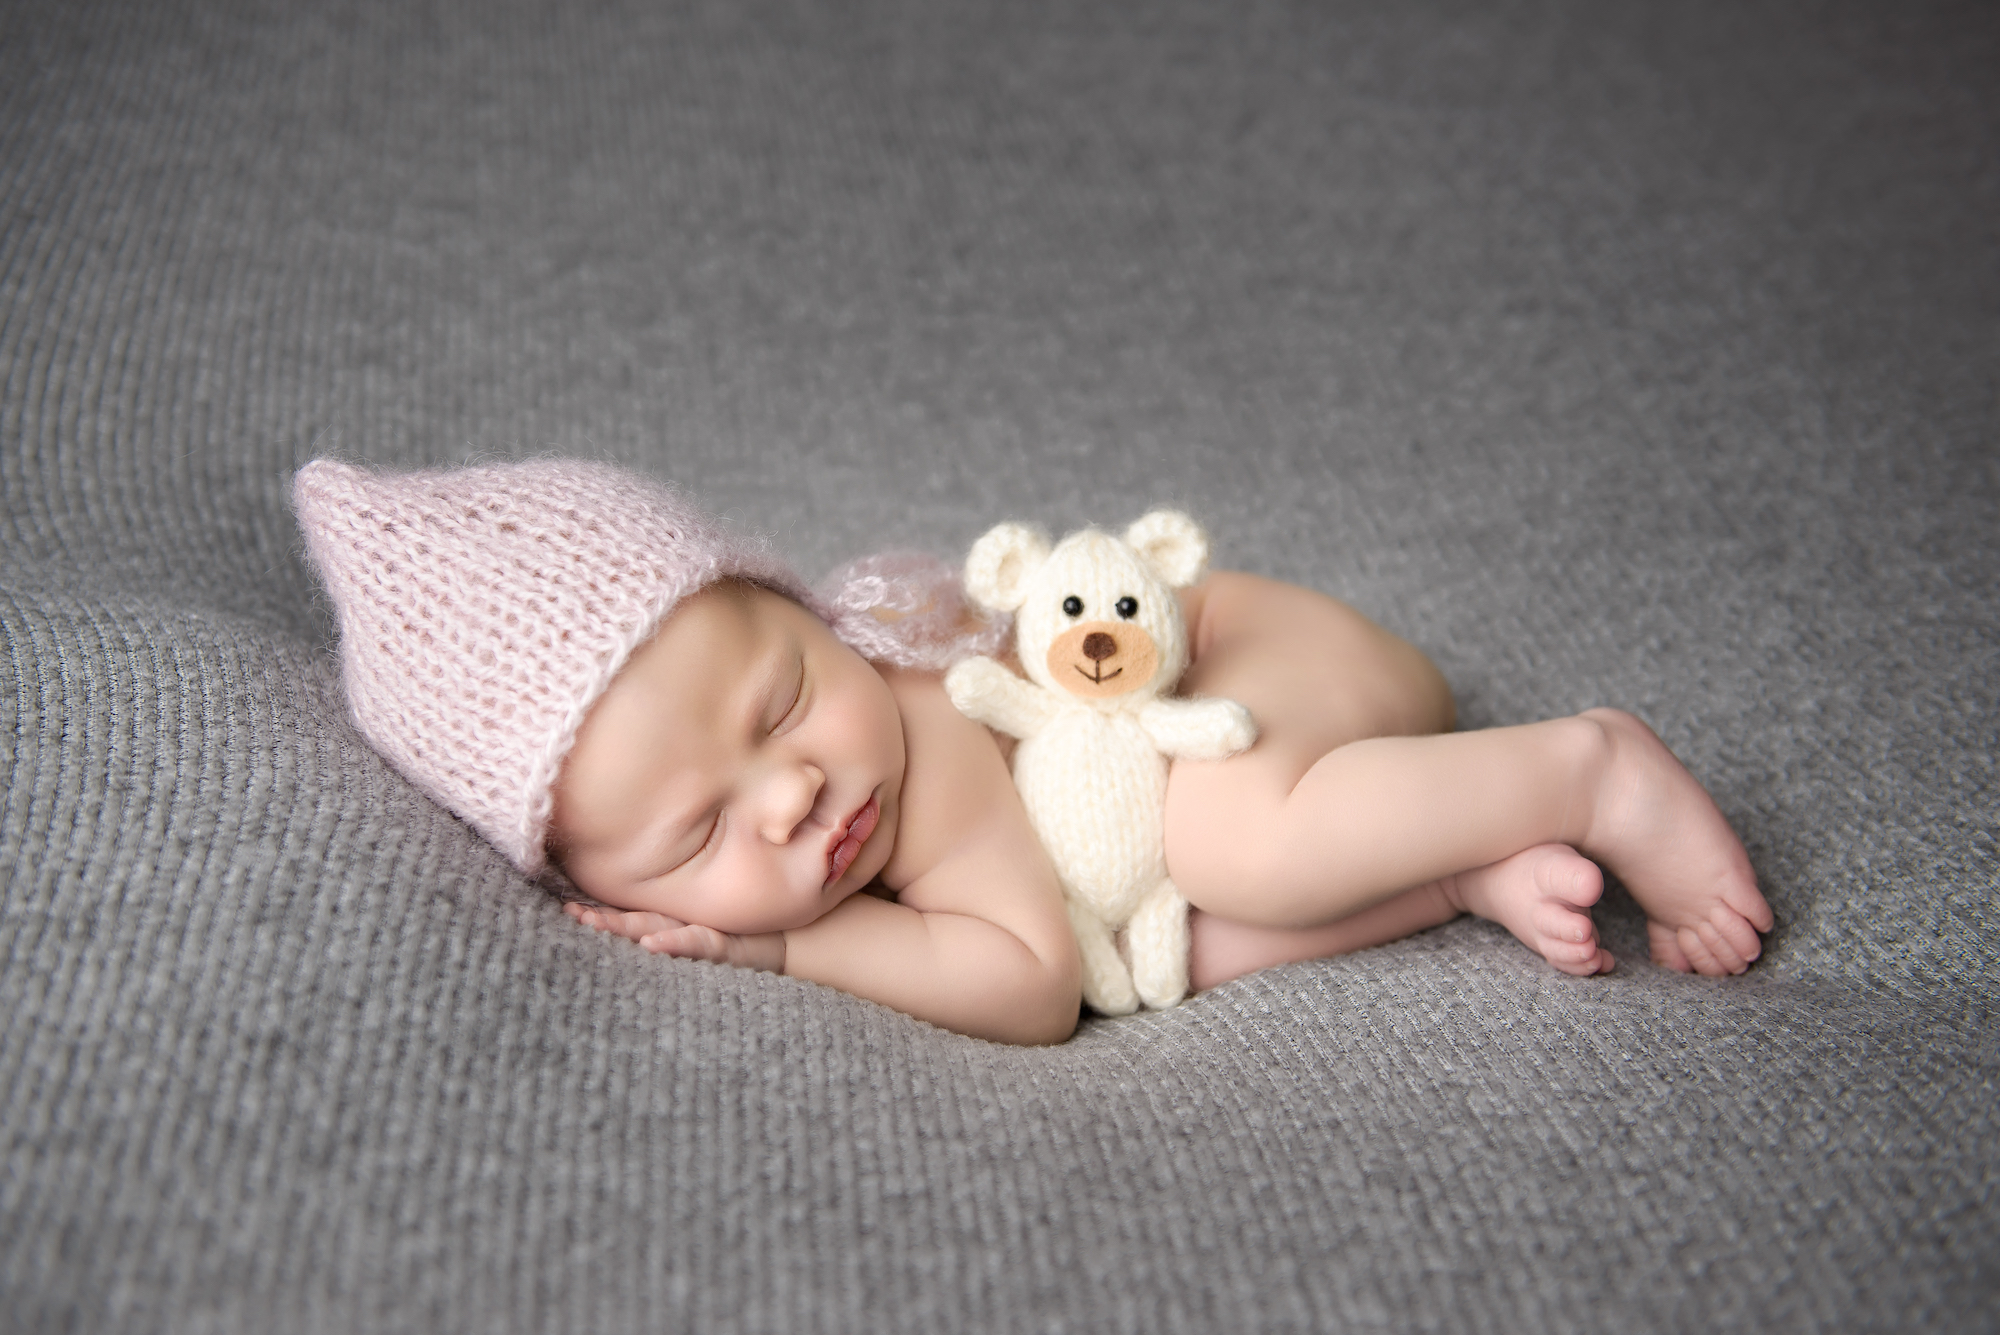 Calgary Newborn Photographer Baby With Teddy Bear